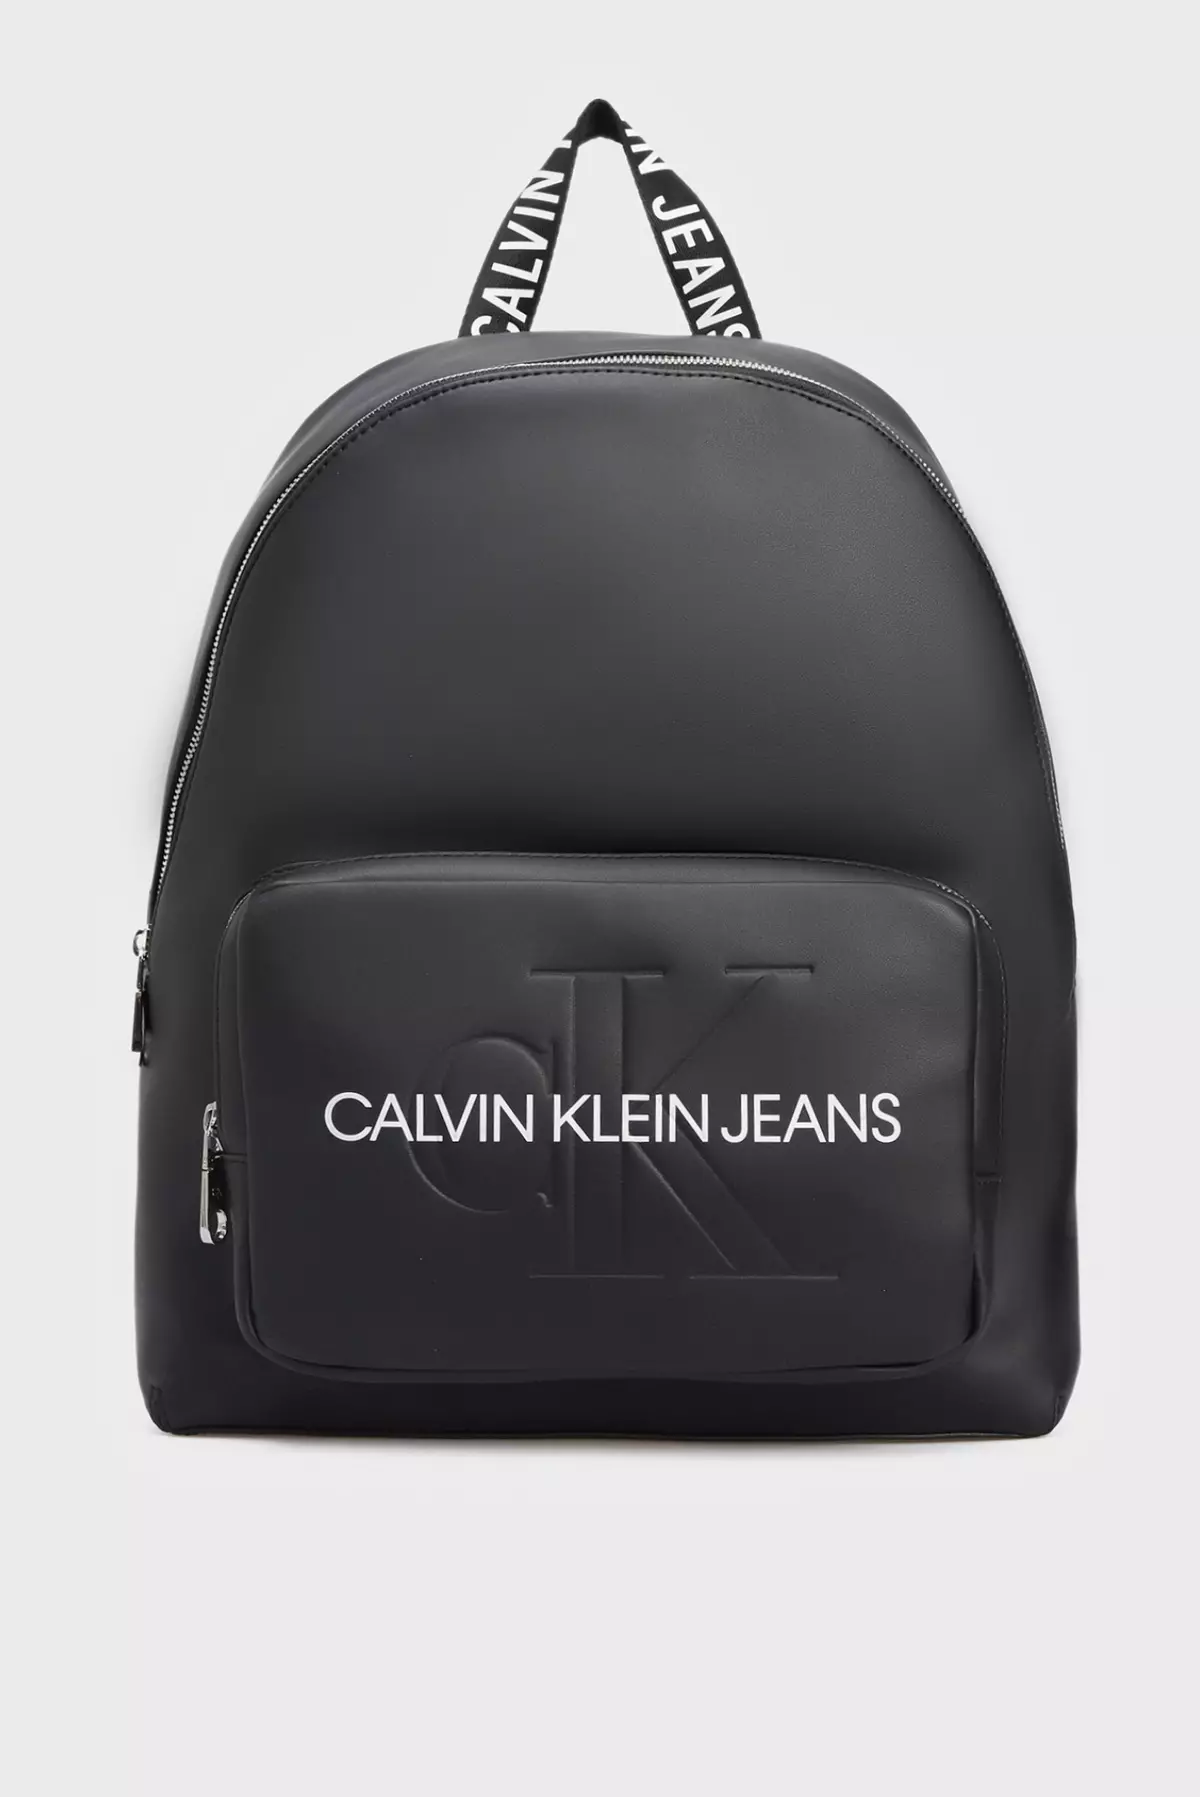 Calvin Klein Backpacks: Black Kike na Mwanaume, Leather Red, White, Yellow Kwa Monogramm na Rangi nyingine Mifuko - Backpacks 15401_11